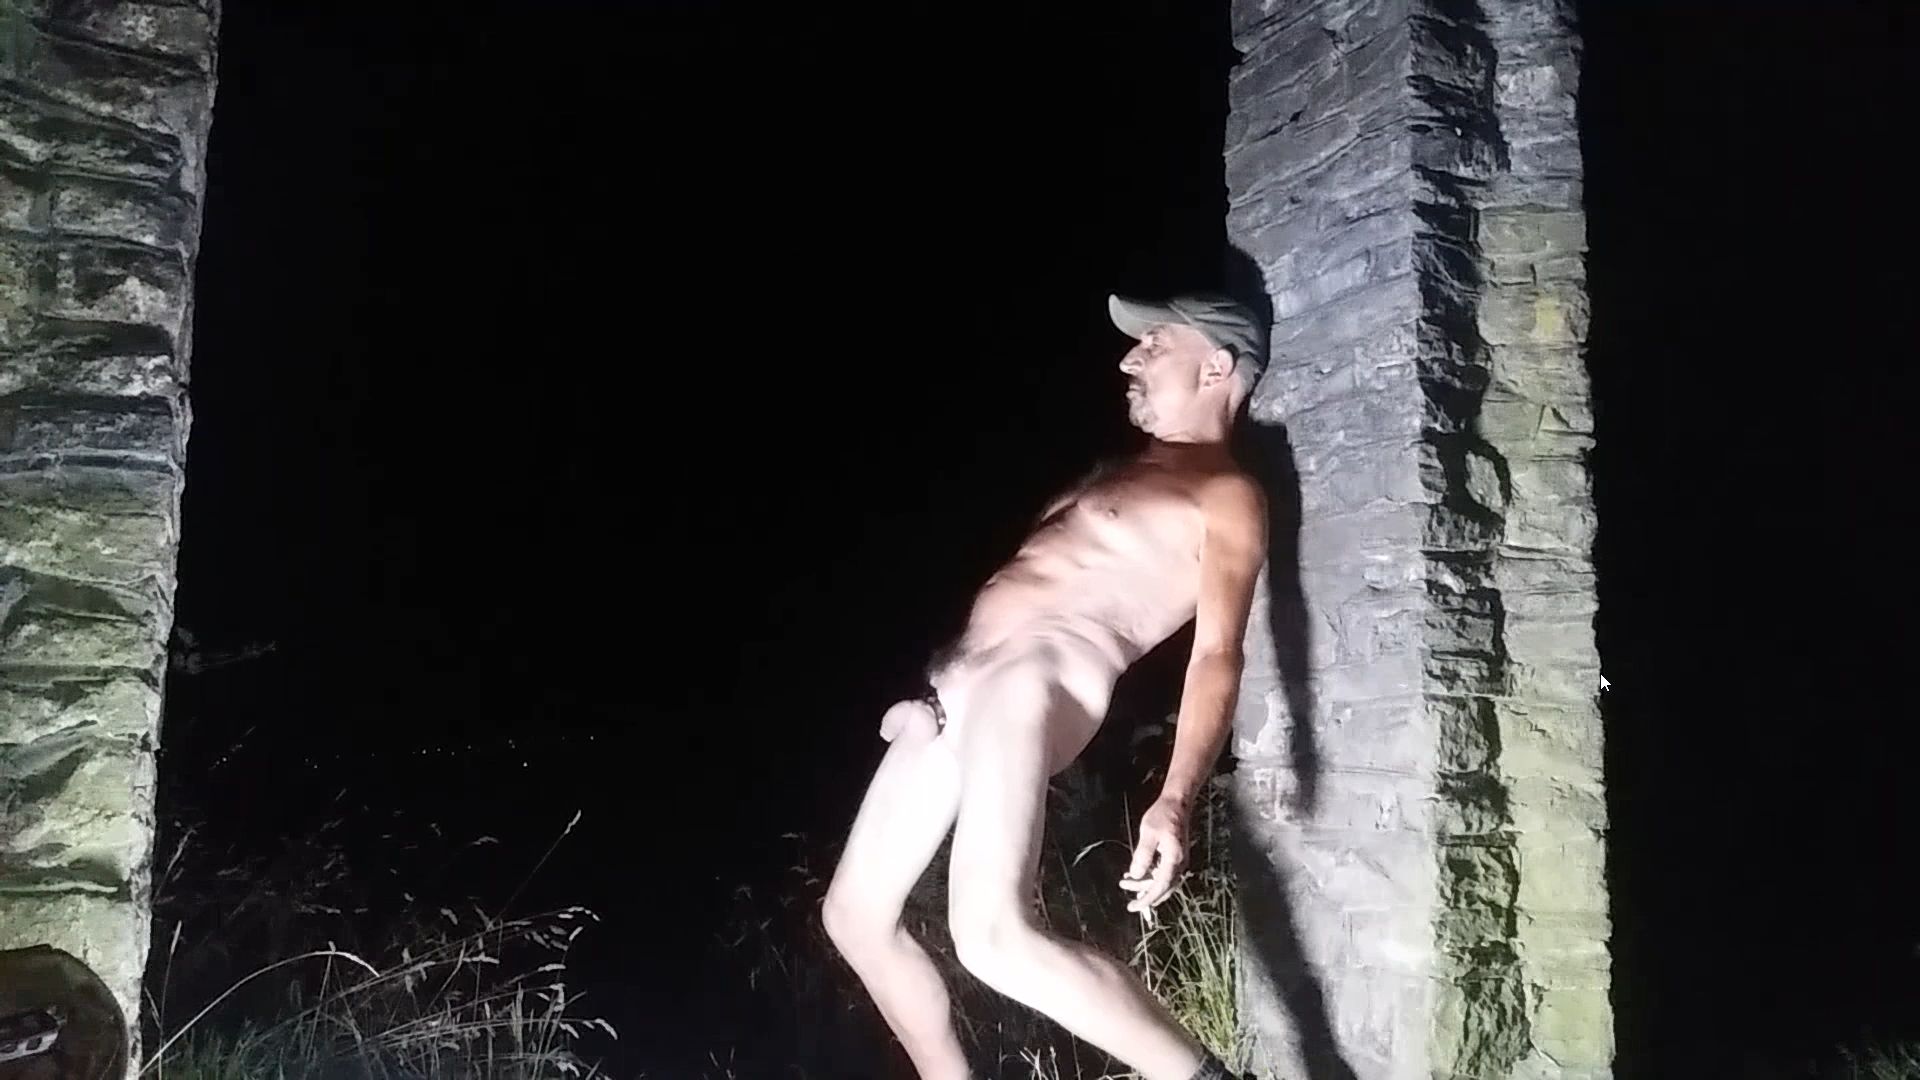 Male Nude Outdoors in Public